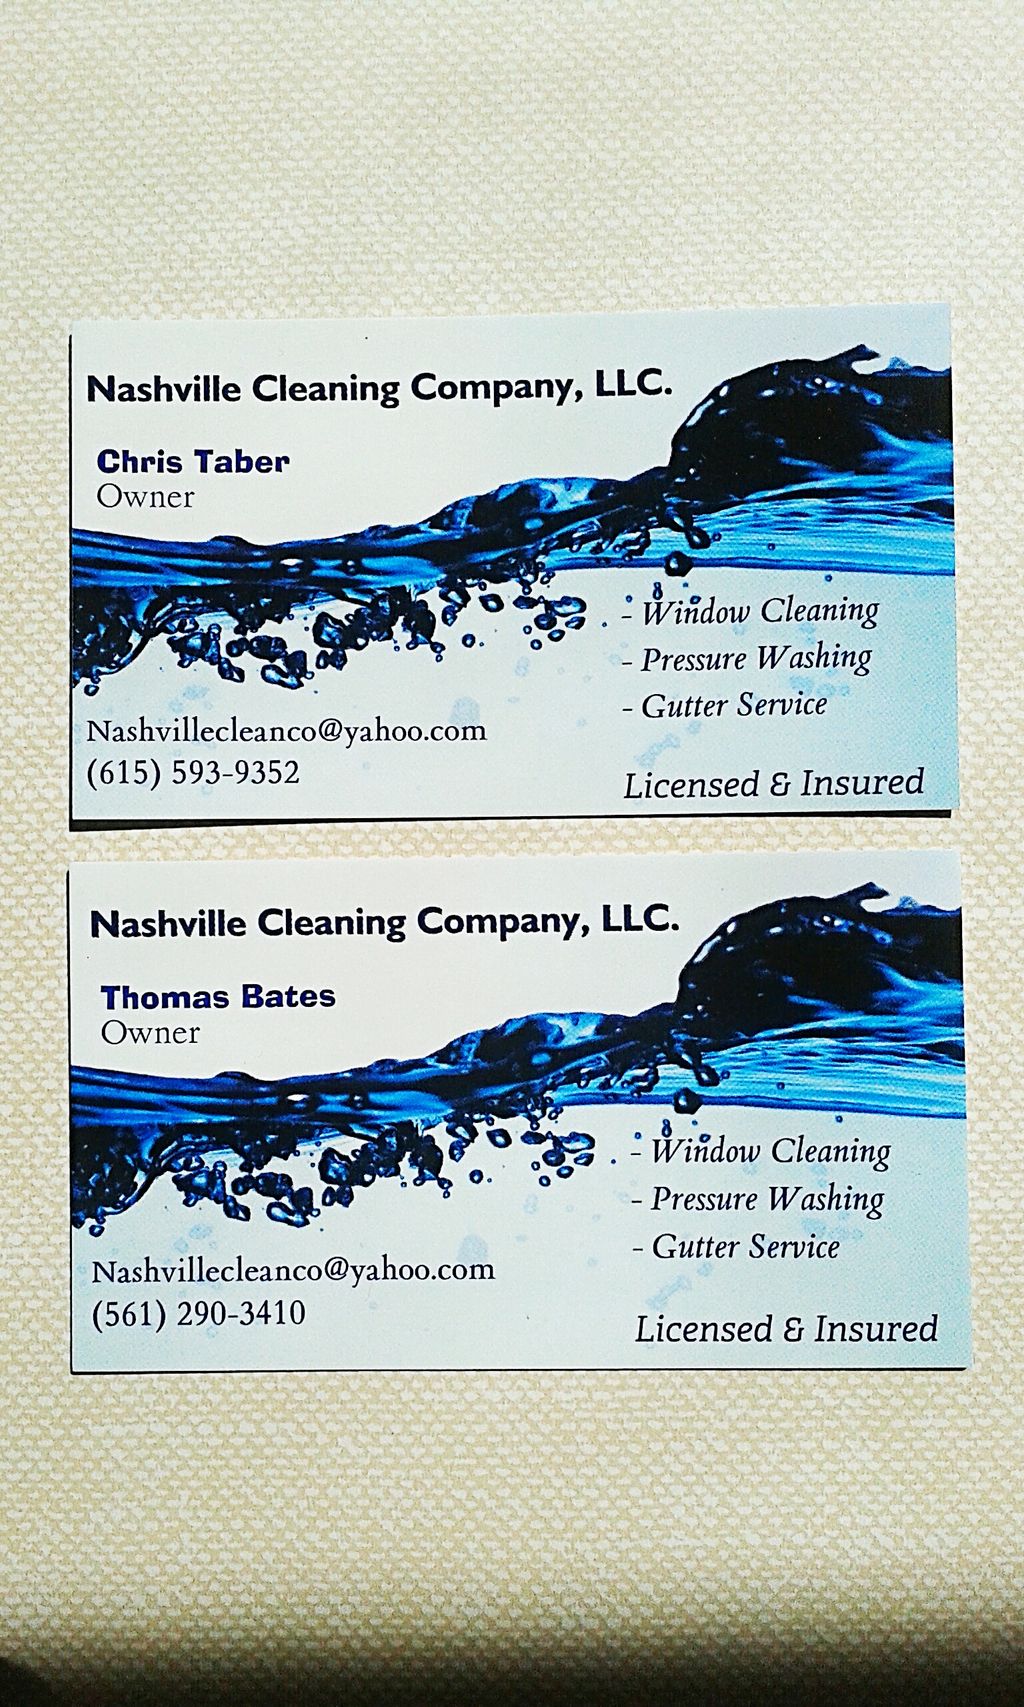 Nashville Cleaning Company, LLC.